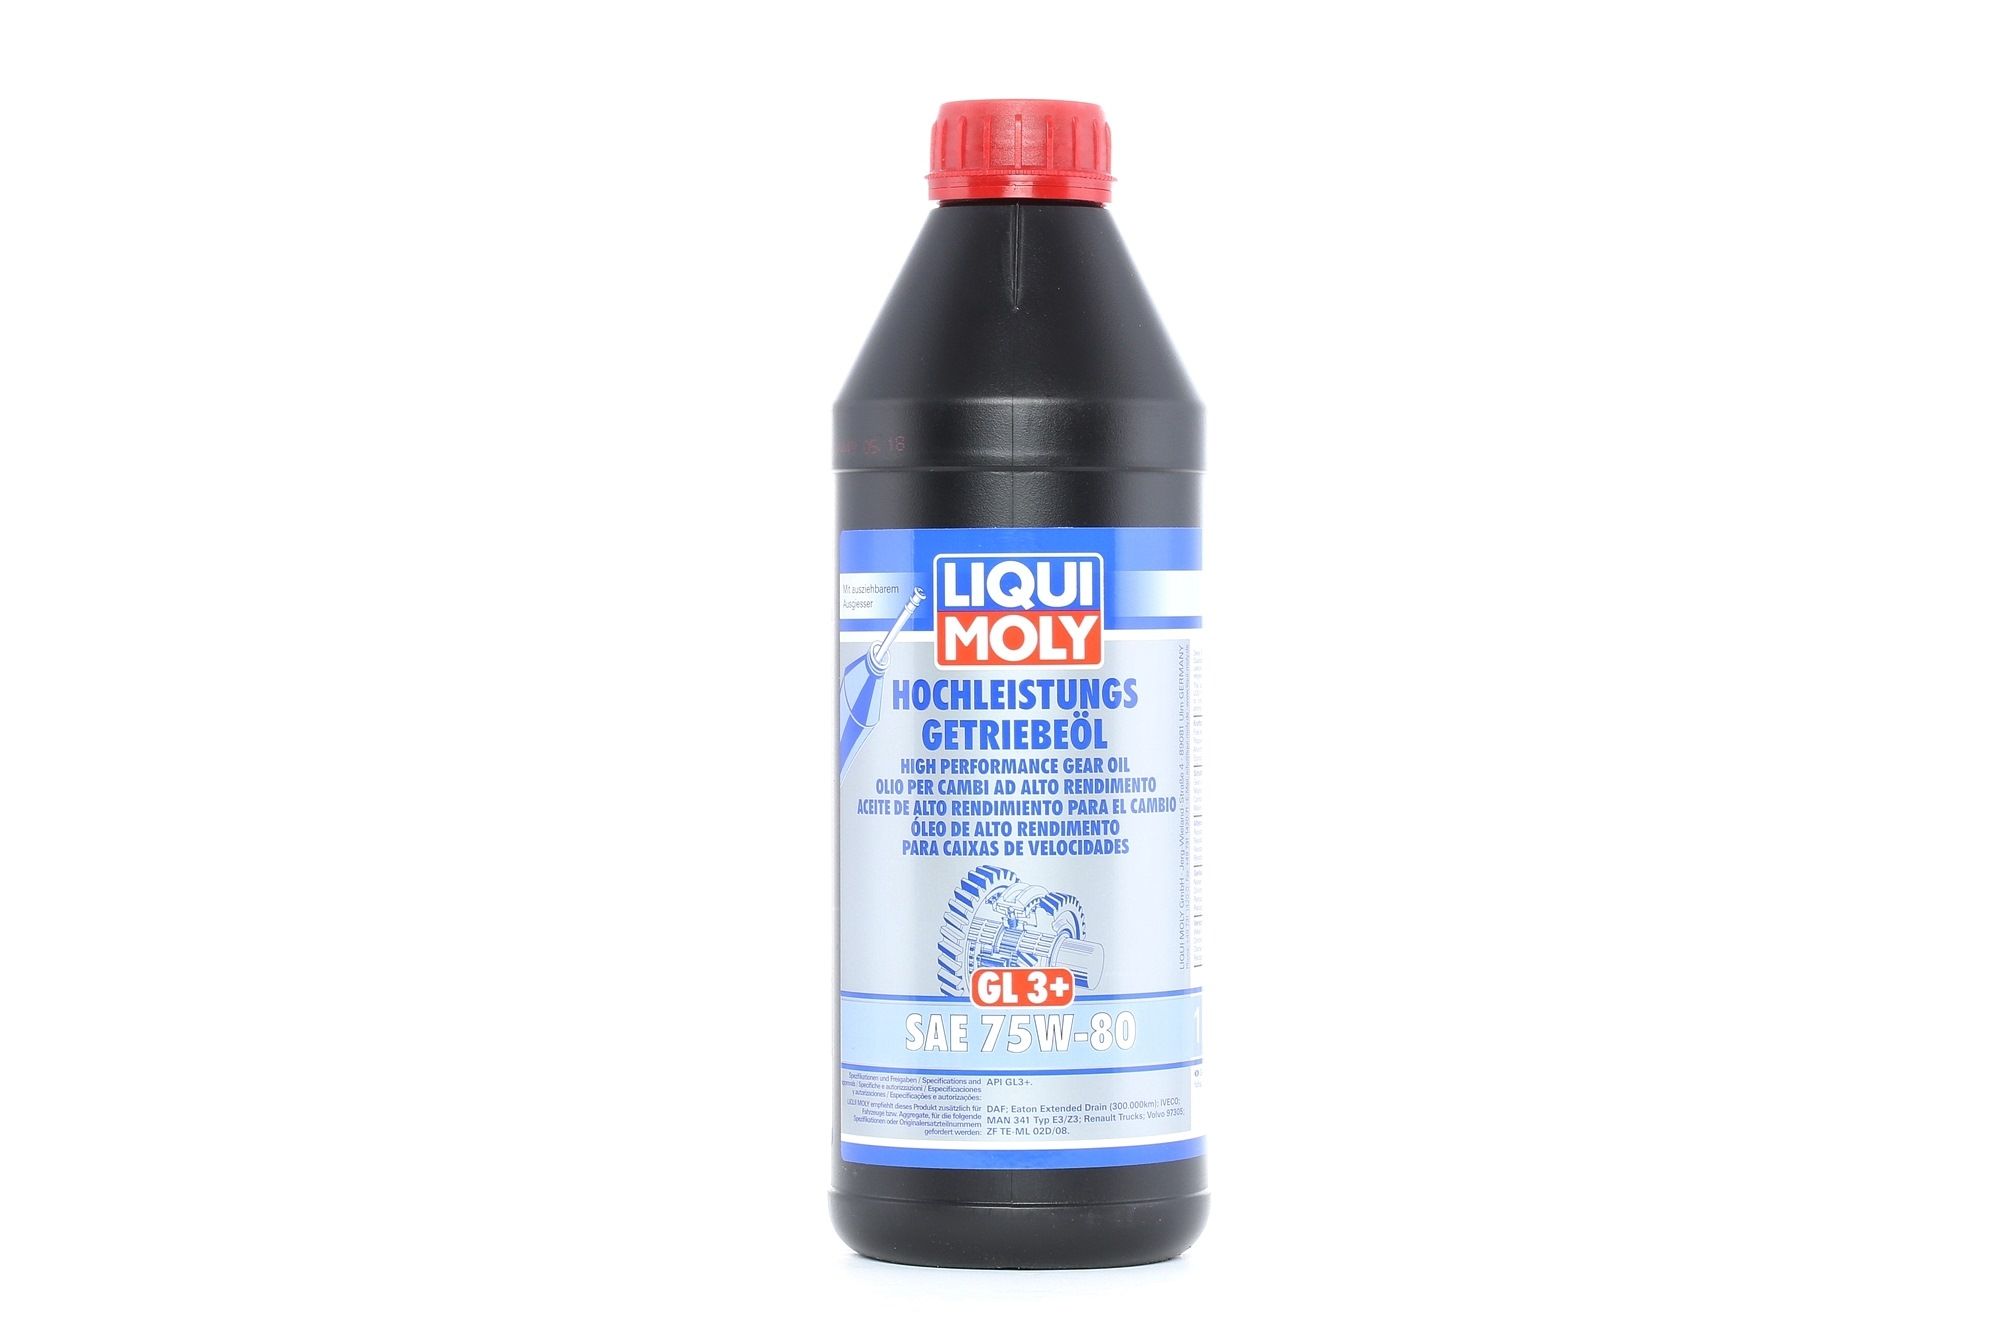 LIQUI MOLY Hochleistungs GL3+ 4427 Gearkasseolie Inhalt: 1l, 75W-80